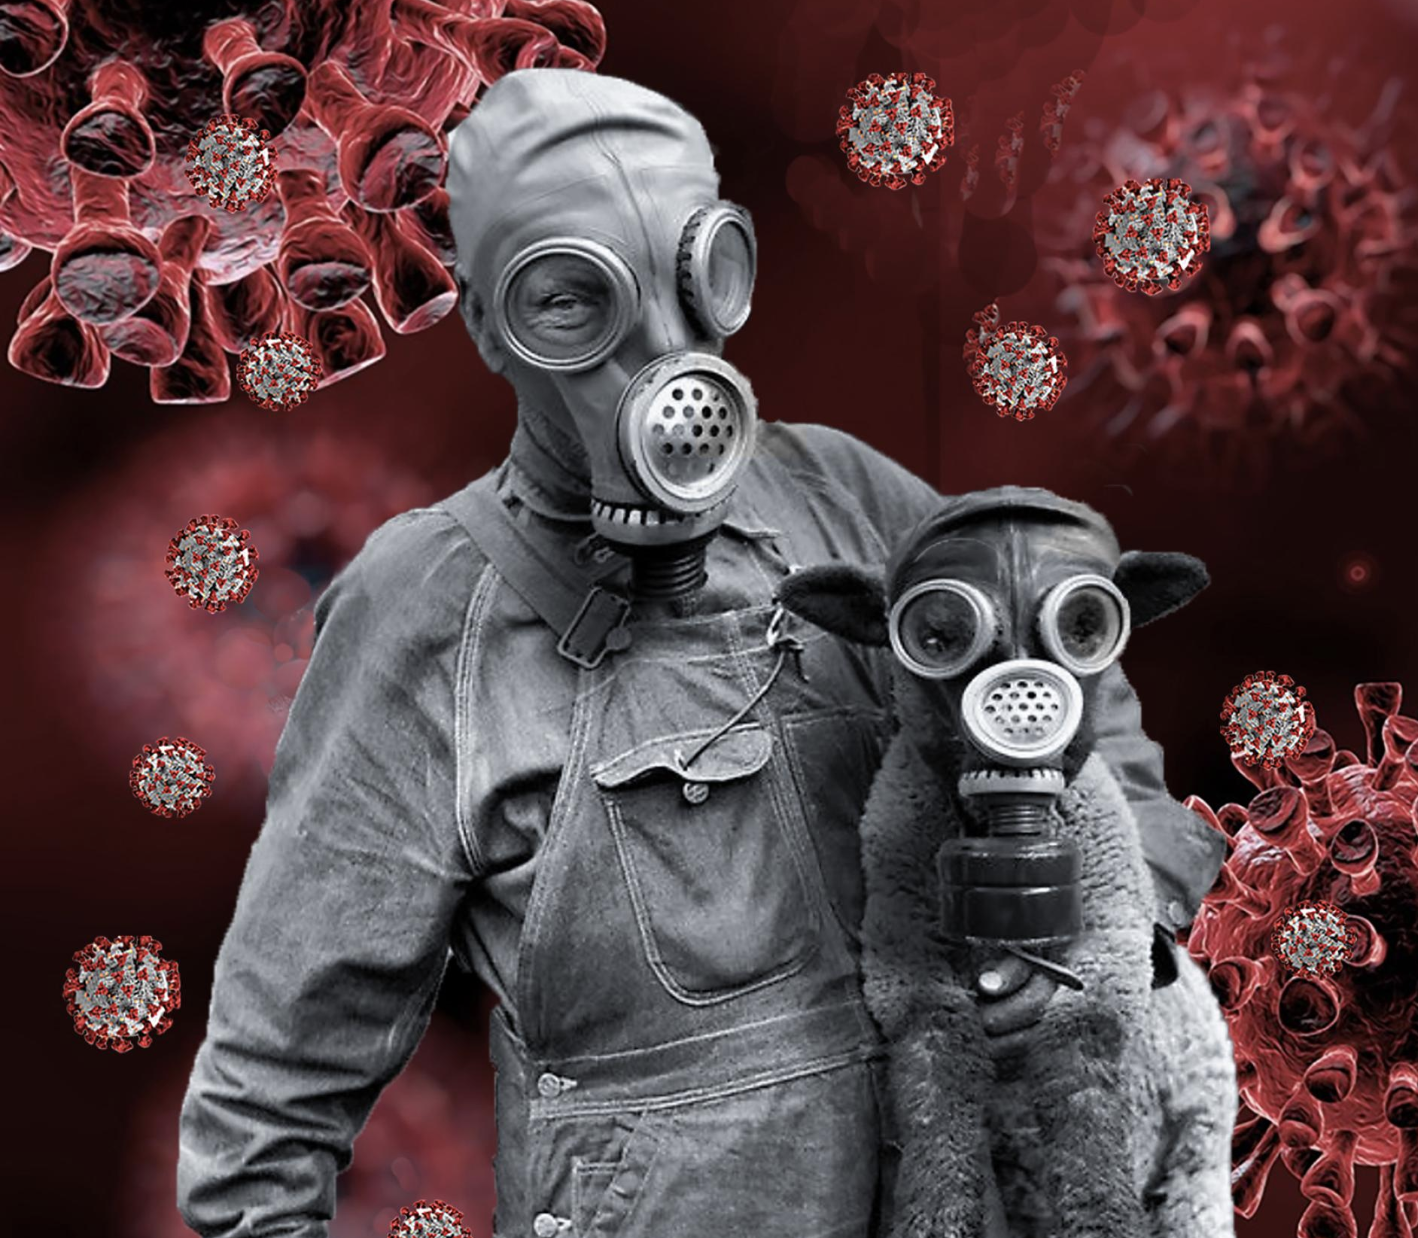 corona virus pandemic dreams